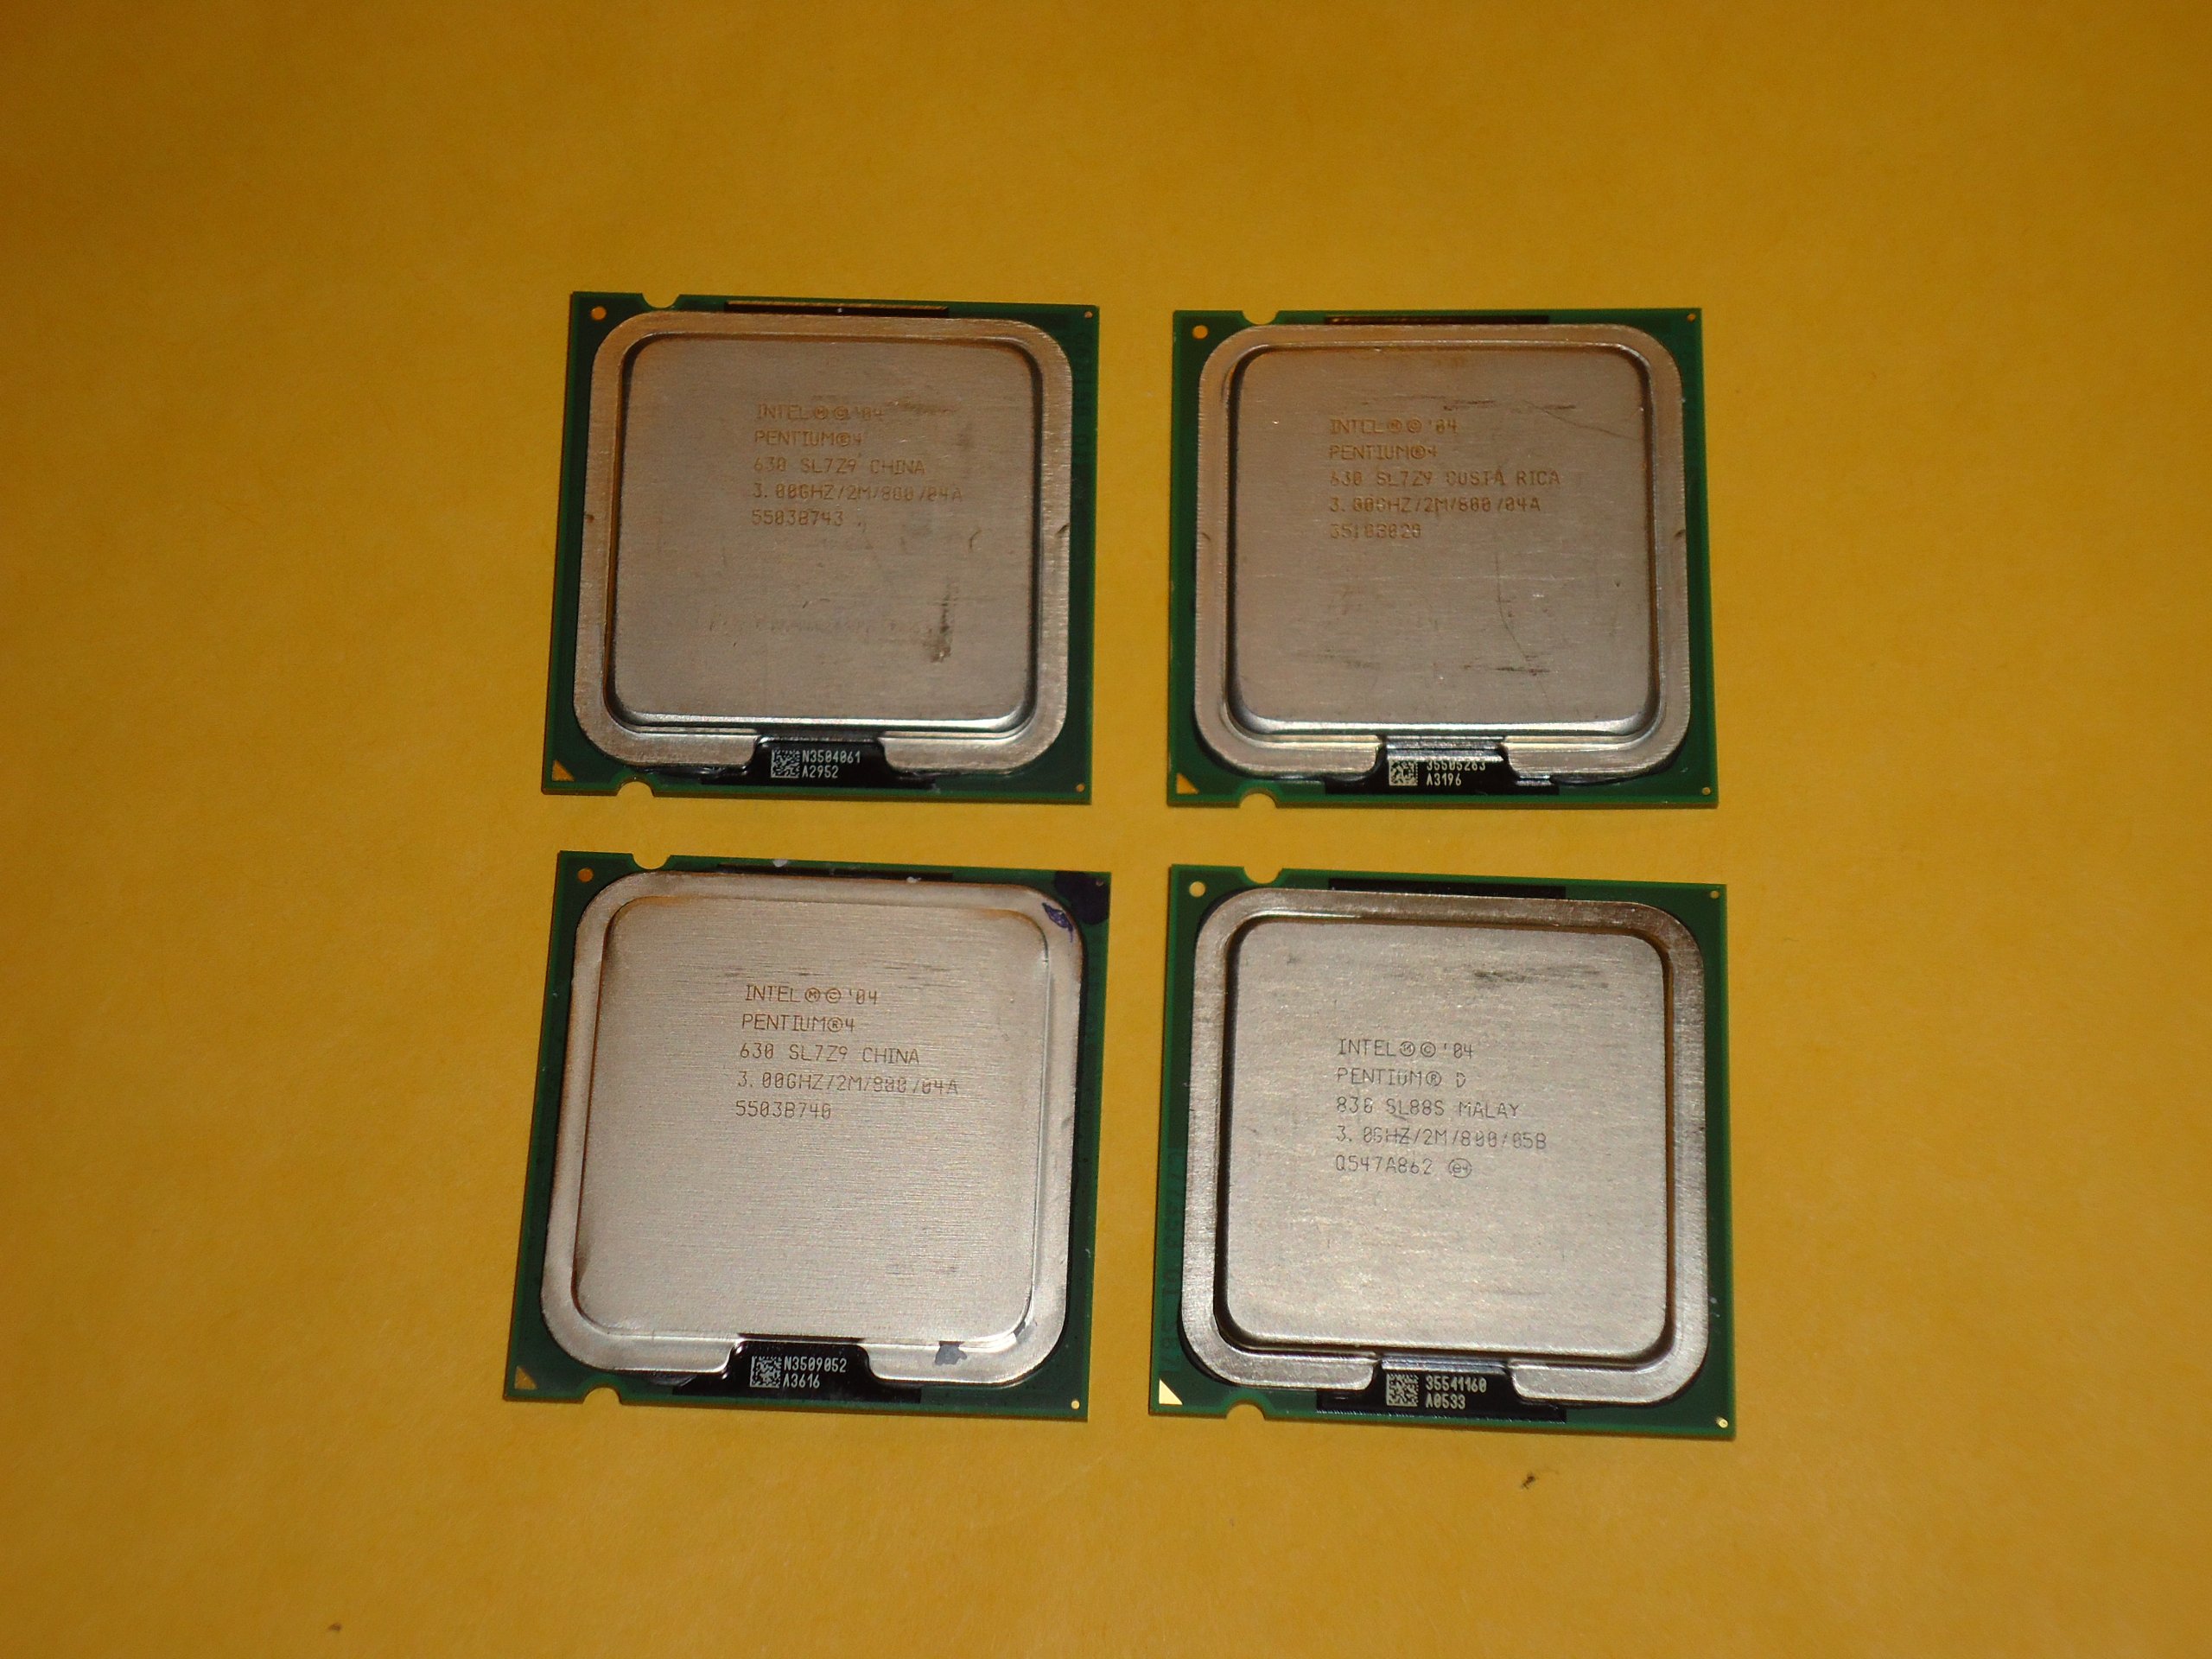 Mua Intel Pentium 4 Processor 630 3Ghz/2M/800 LGA 775 CPU trên Amazon ...